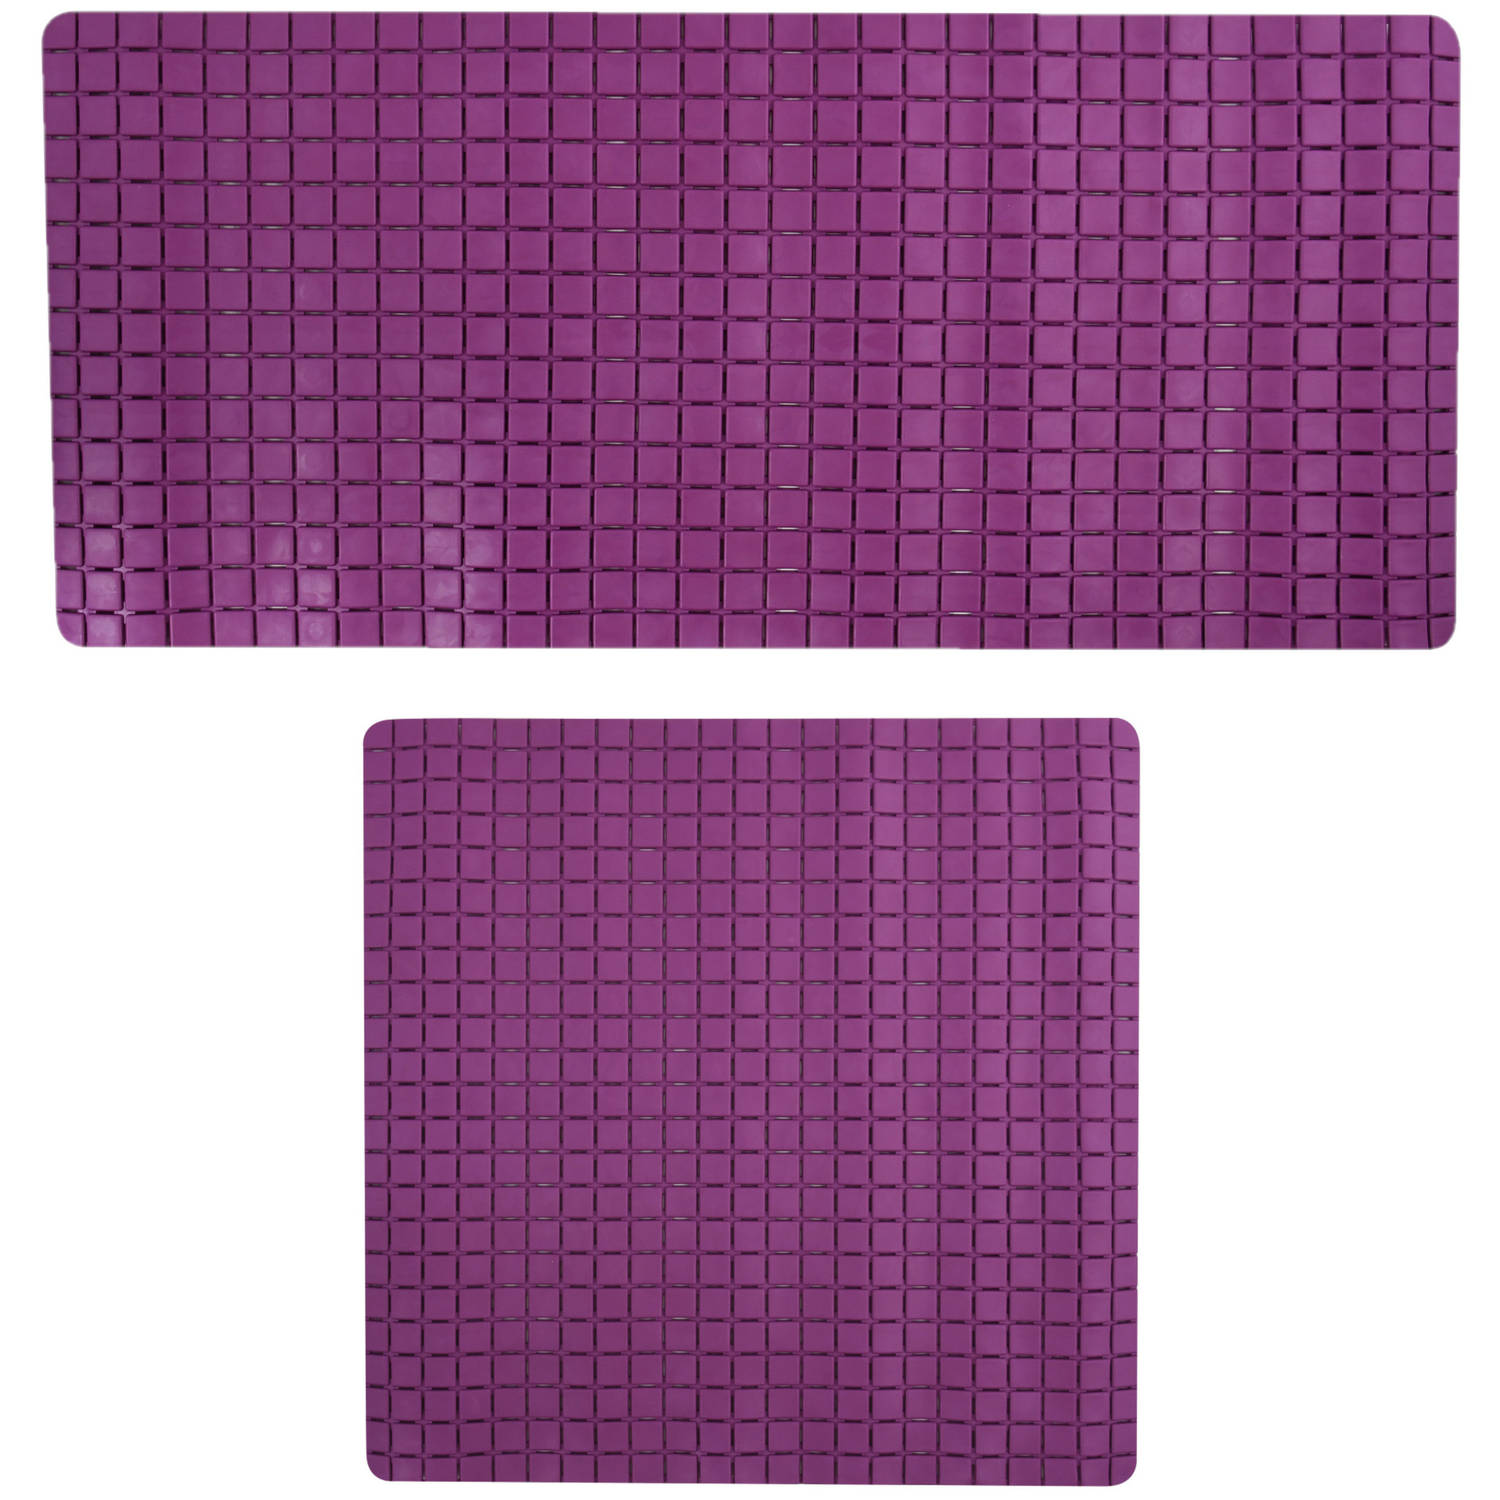 MSV Douche-bad anti-slip matten set badkamer rubber 2x stuks paars 2 formaten Badmatjes